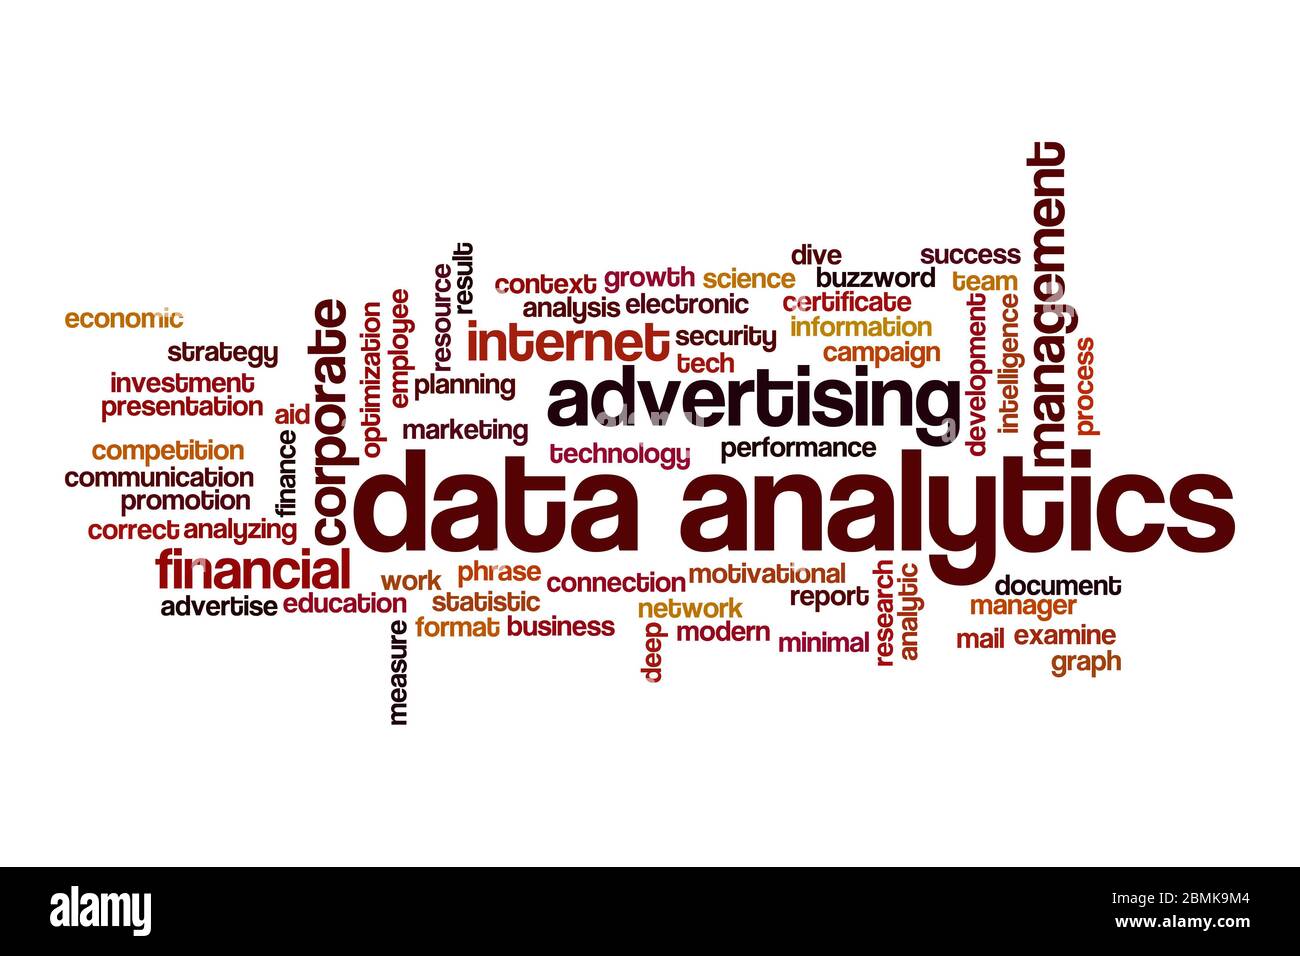 Data analytics word cloud concept on white background Stock Photo - Alamy